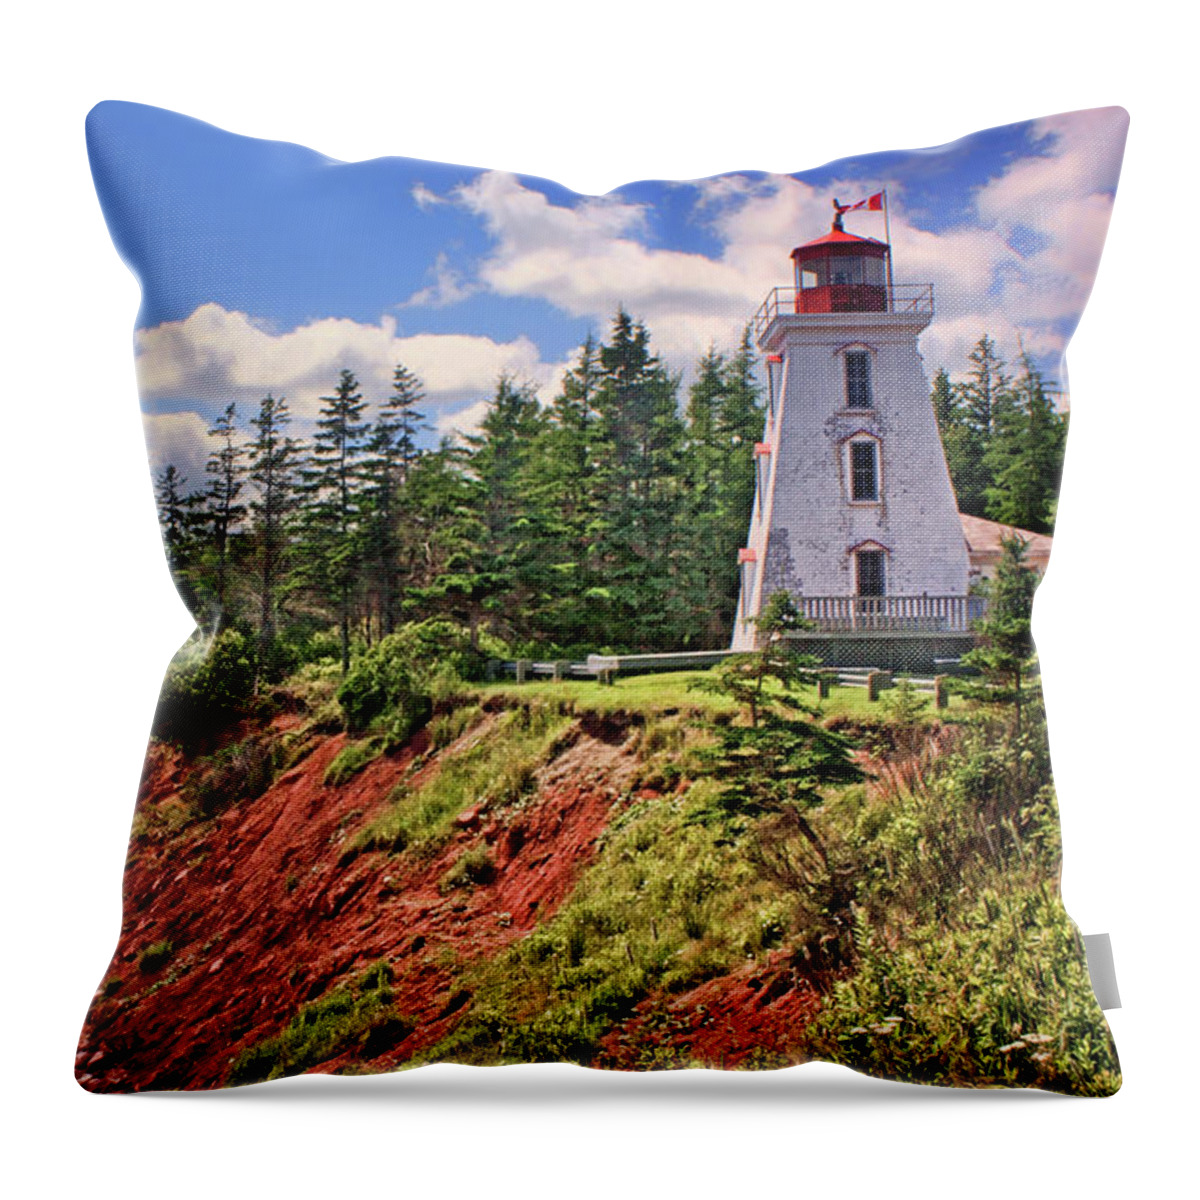 Cape Bear Lighthouse Throw Pillow featuring the photograph Cape Bear Lighthouse - 1 by Nikolyn McDonald